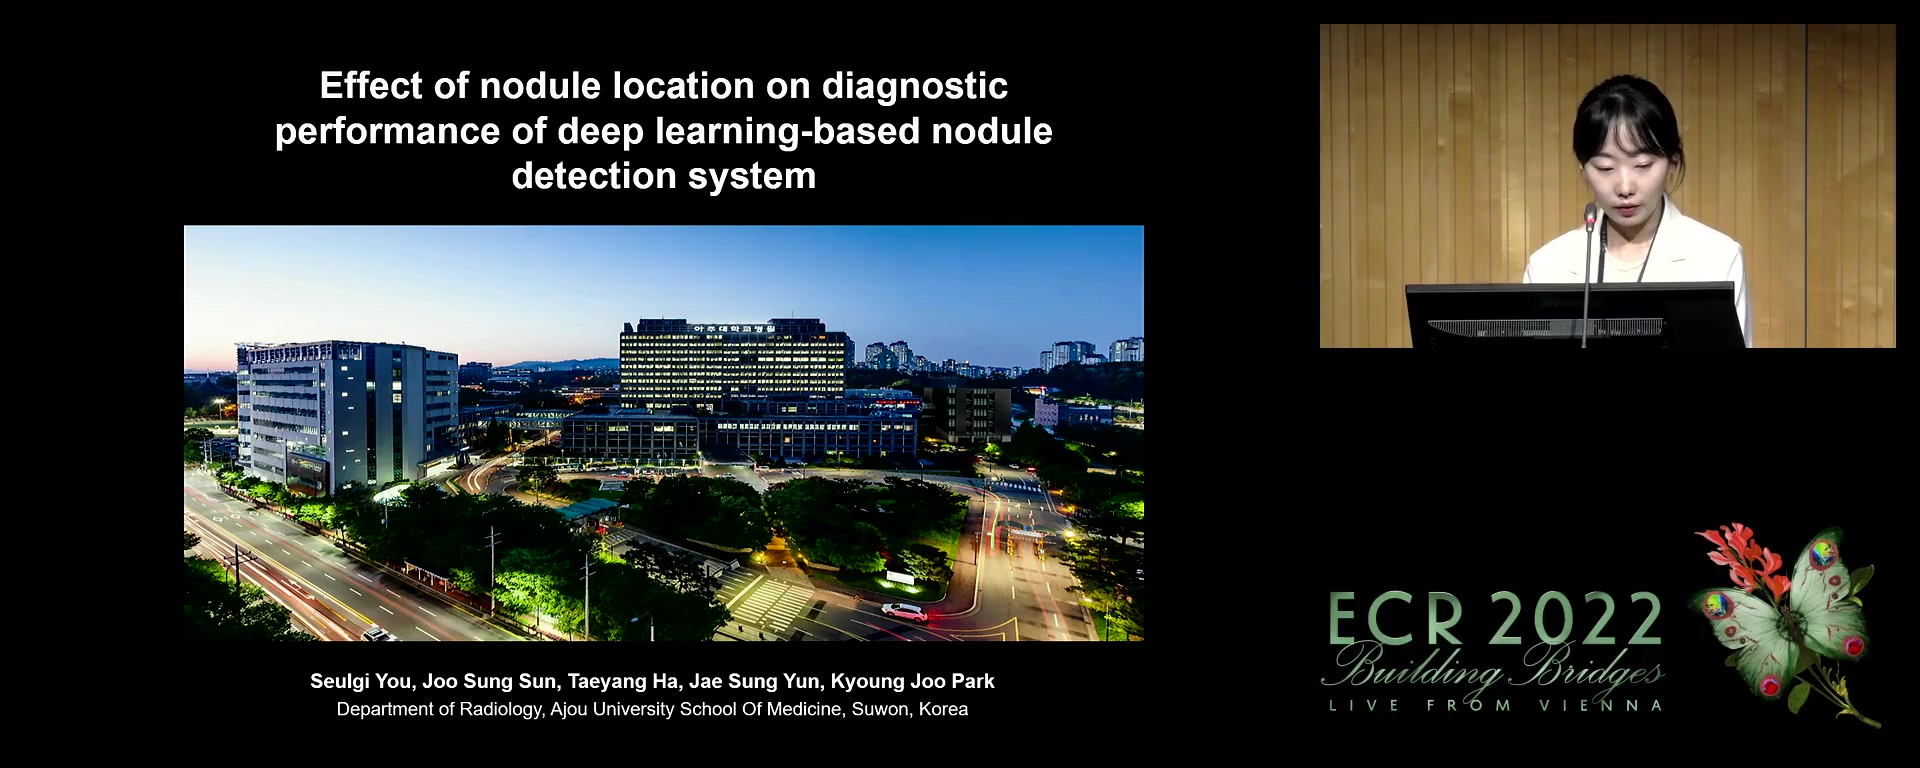 Effect of nodule location on diagnostic performance of deep learning-based nodule detection system - Seulgi You, Suwon / KR